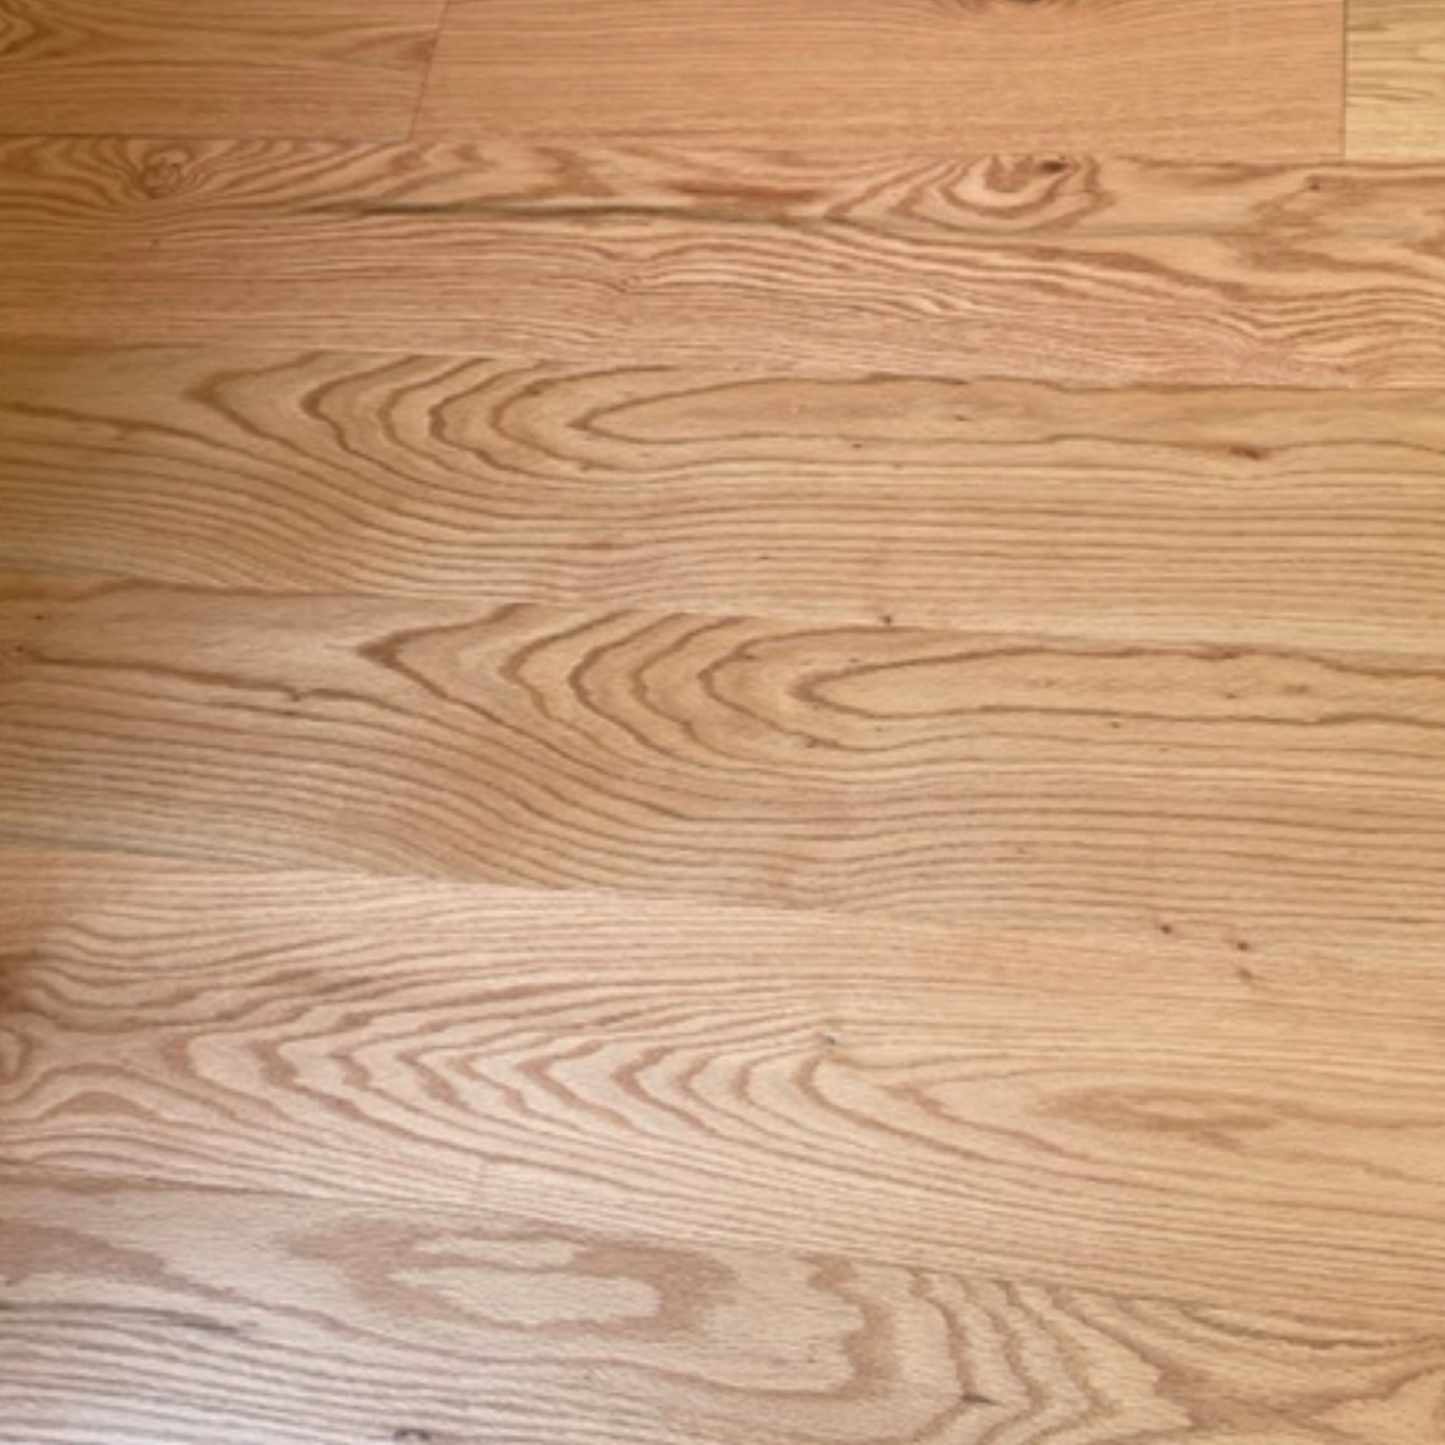 7" x 1/2" Engineered Red Oak Natural Hardwood Flooring